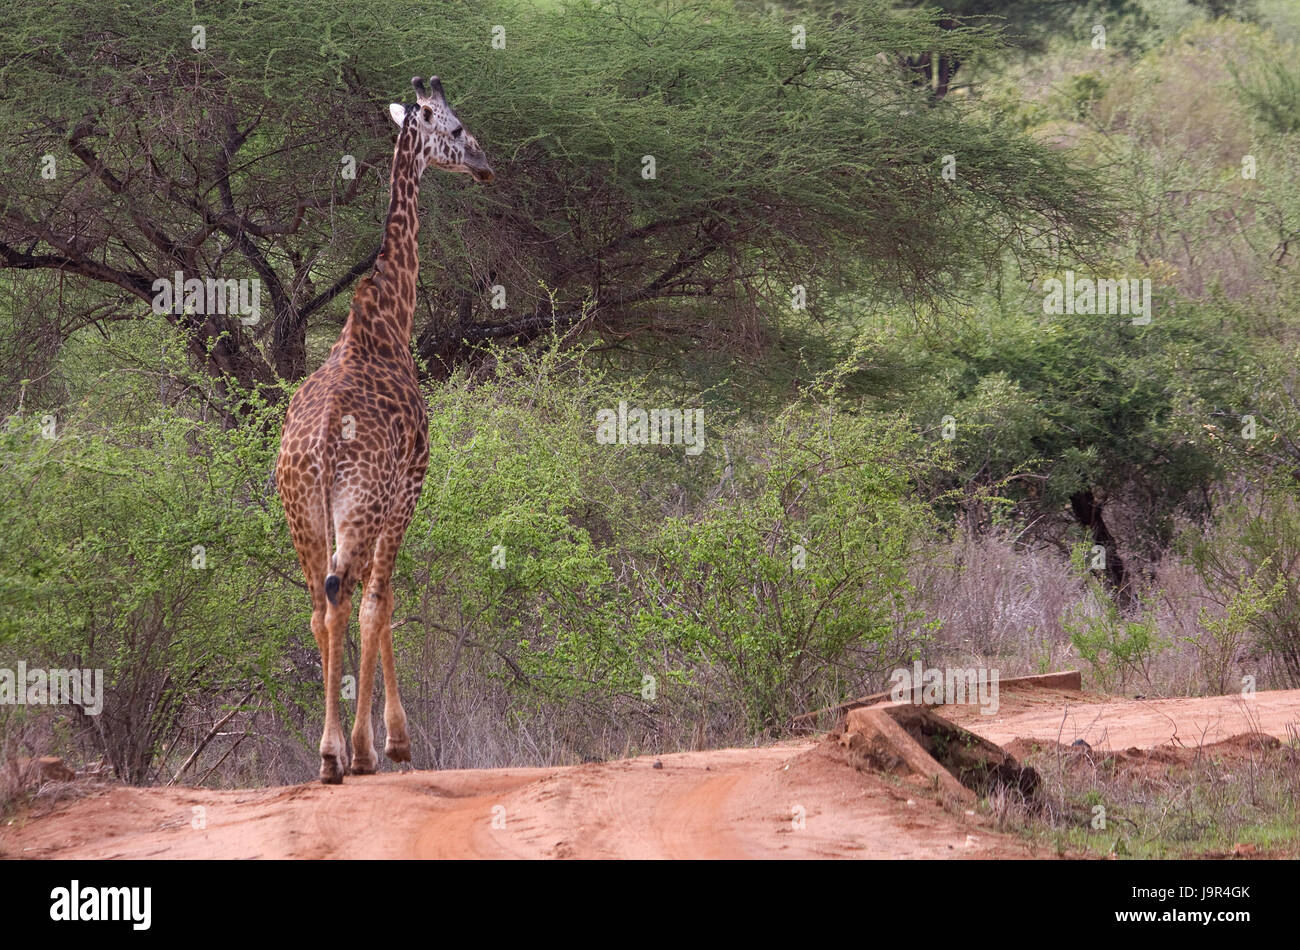 national park, africa, kenya, wildlife, safari, giraffe, tanzania, tsavo, Stock Photo